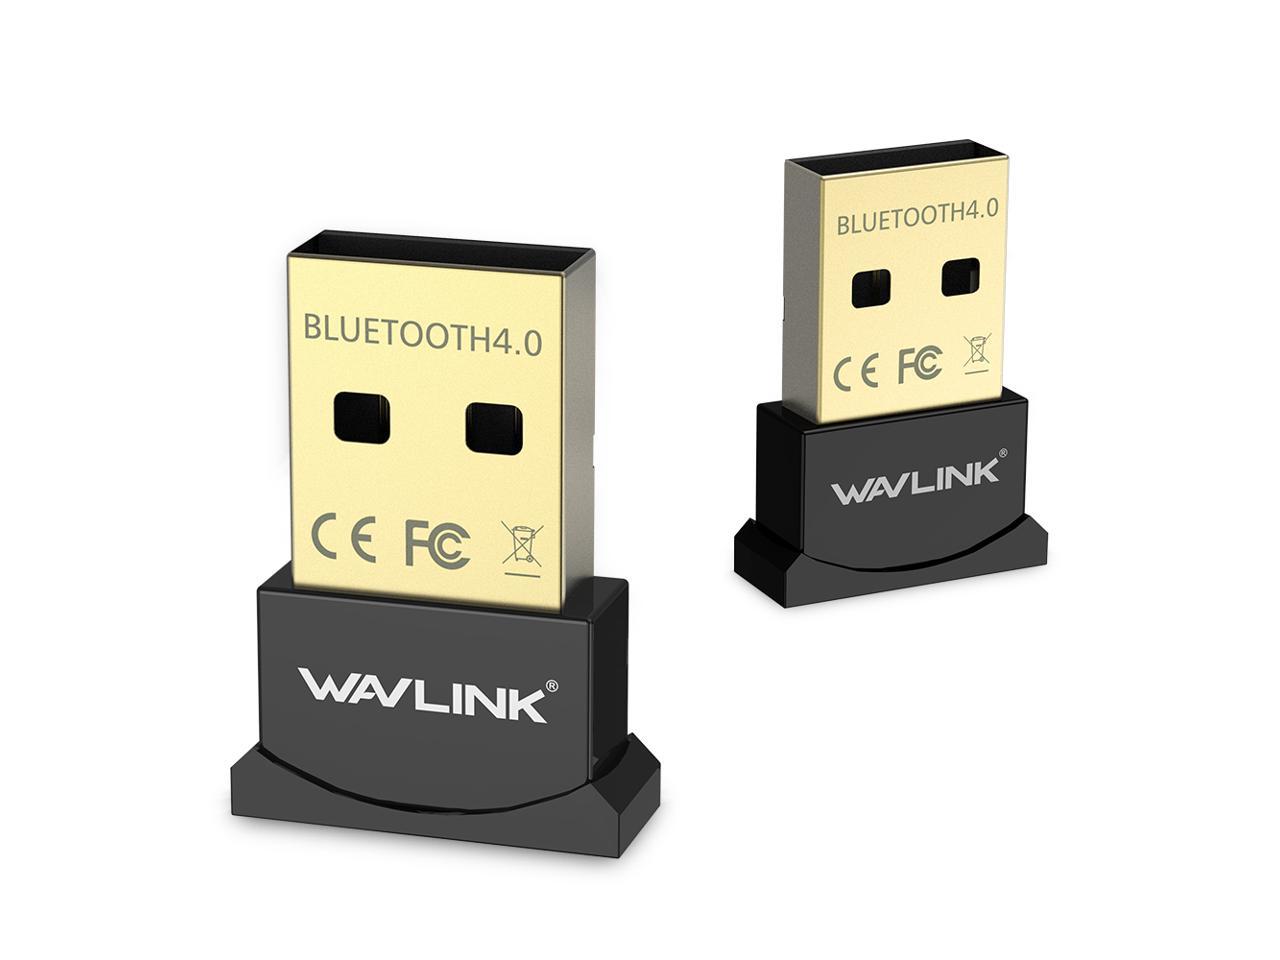 2 X Bluetooth V4.0 USB Adapter CSR chip Bluetooth adapter Bluetooth 4.0 Adapter Mini Nano Wireless Stick EDR USB 2.0 Dual-Mode ship from US - Newegg.com